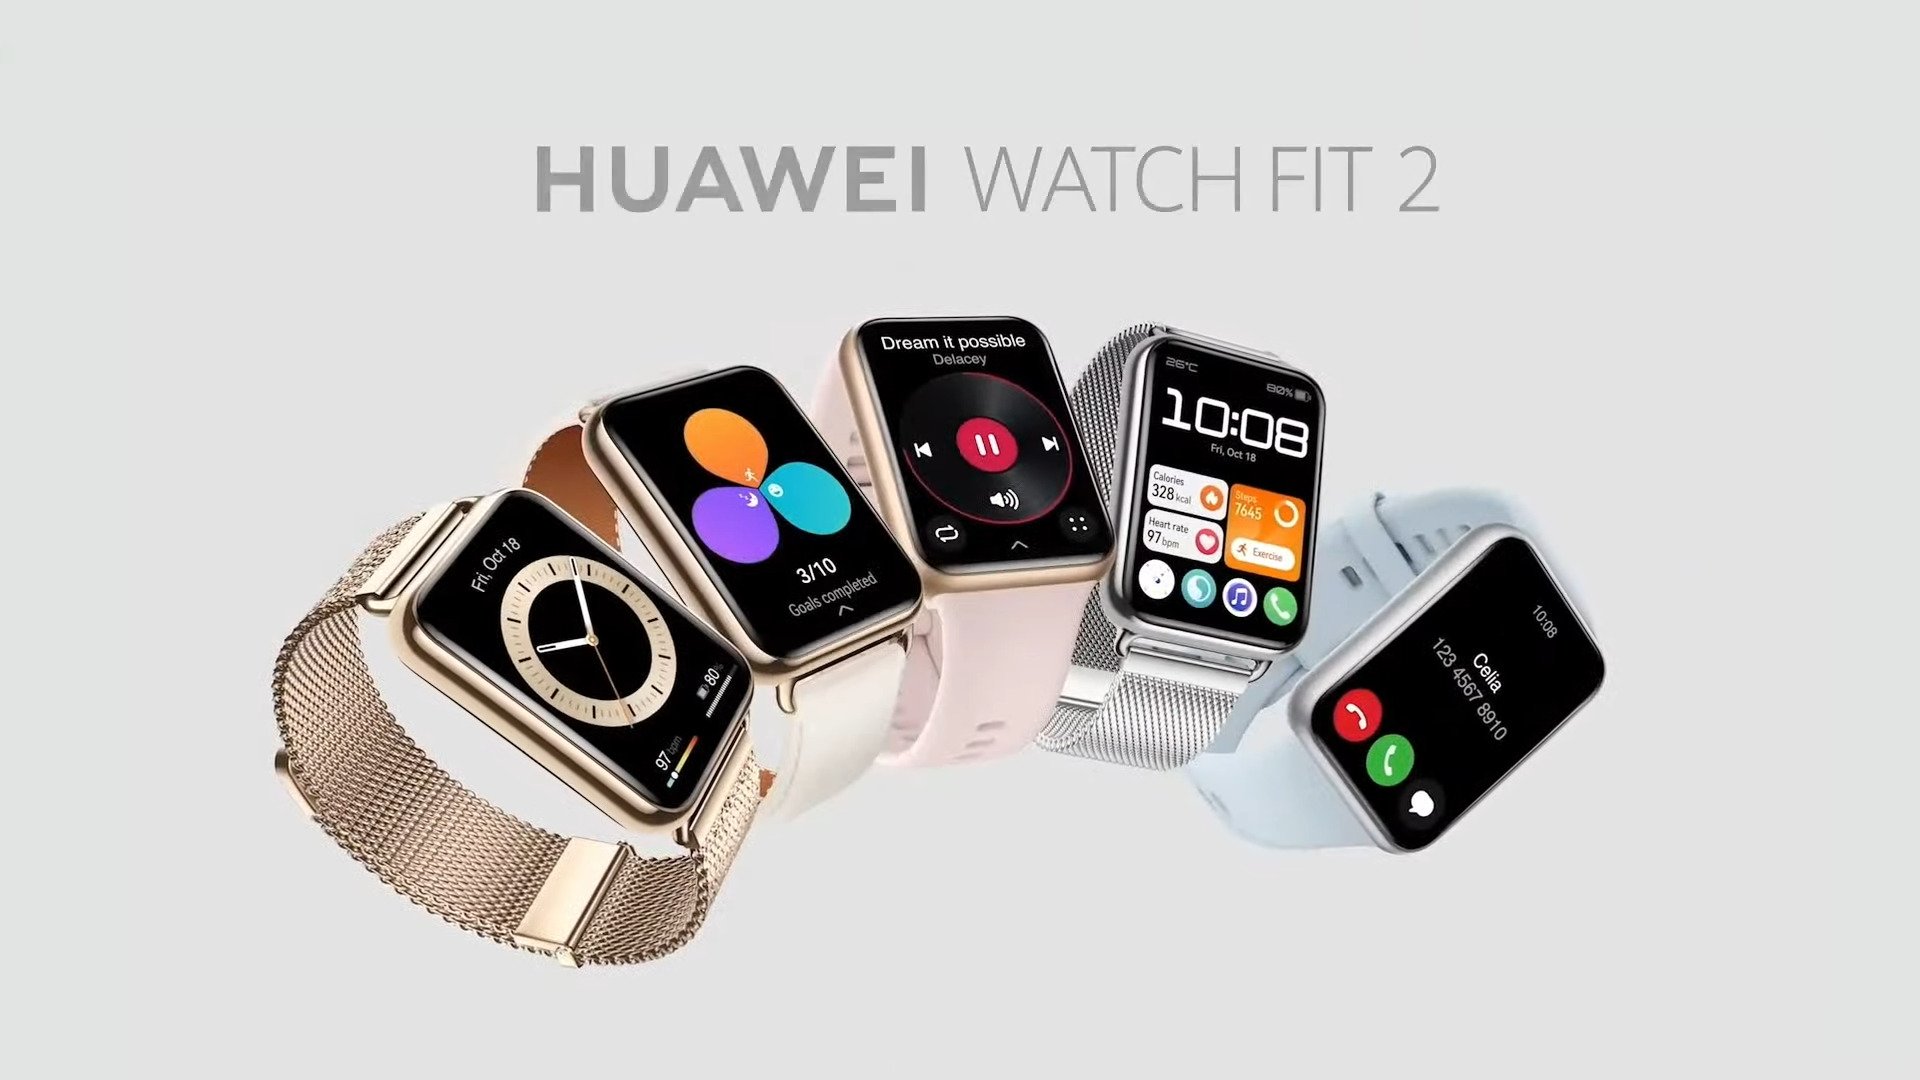 Huawei lance la montre connectée "Huawei Watch Fit 2"